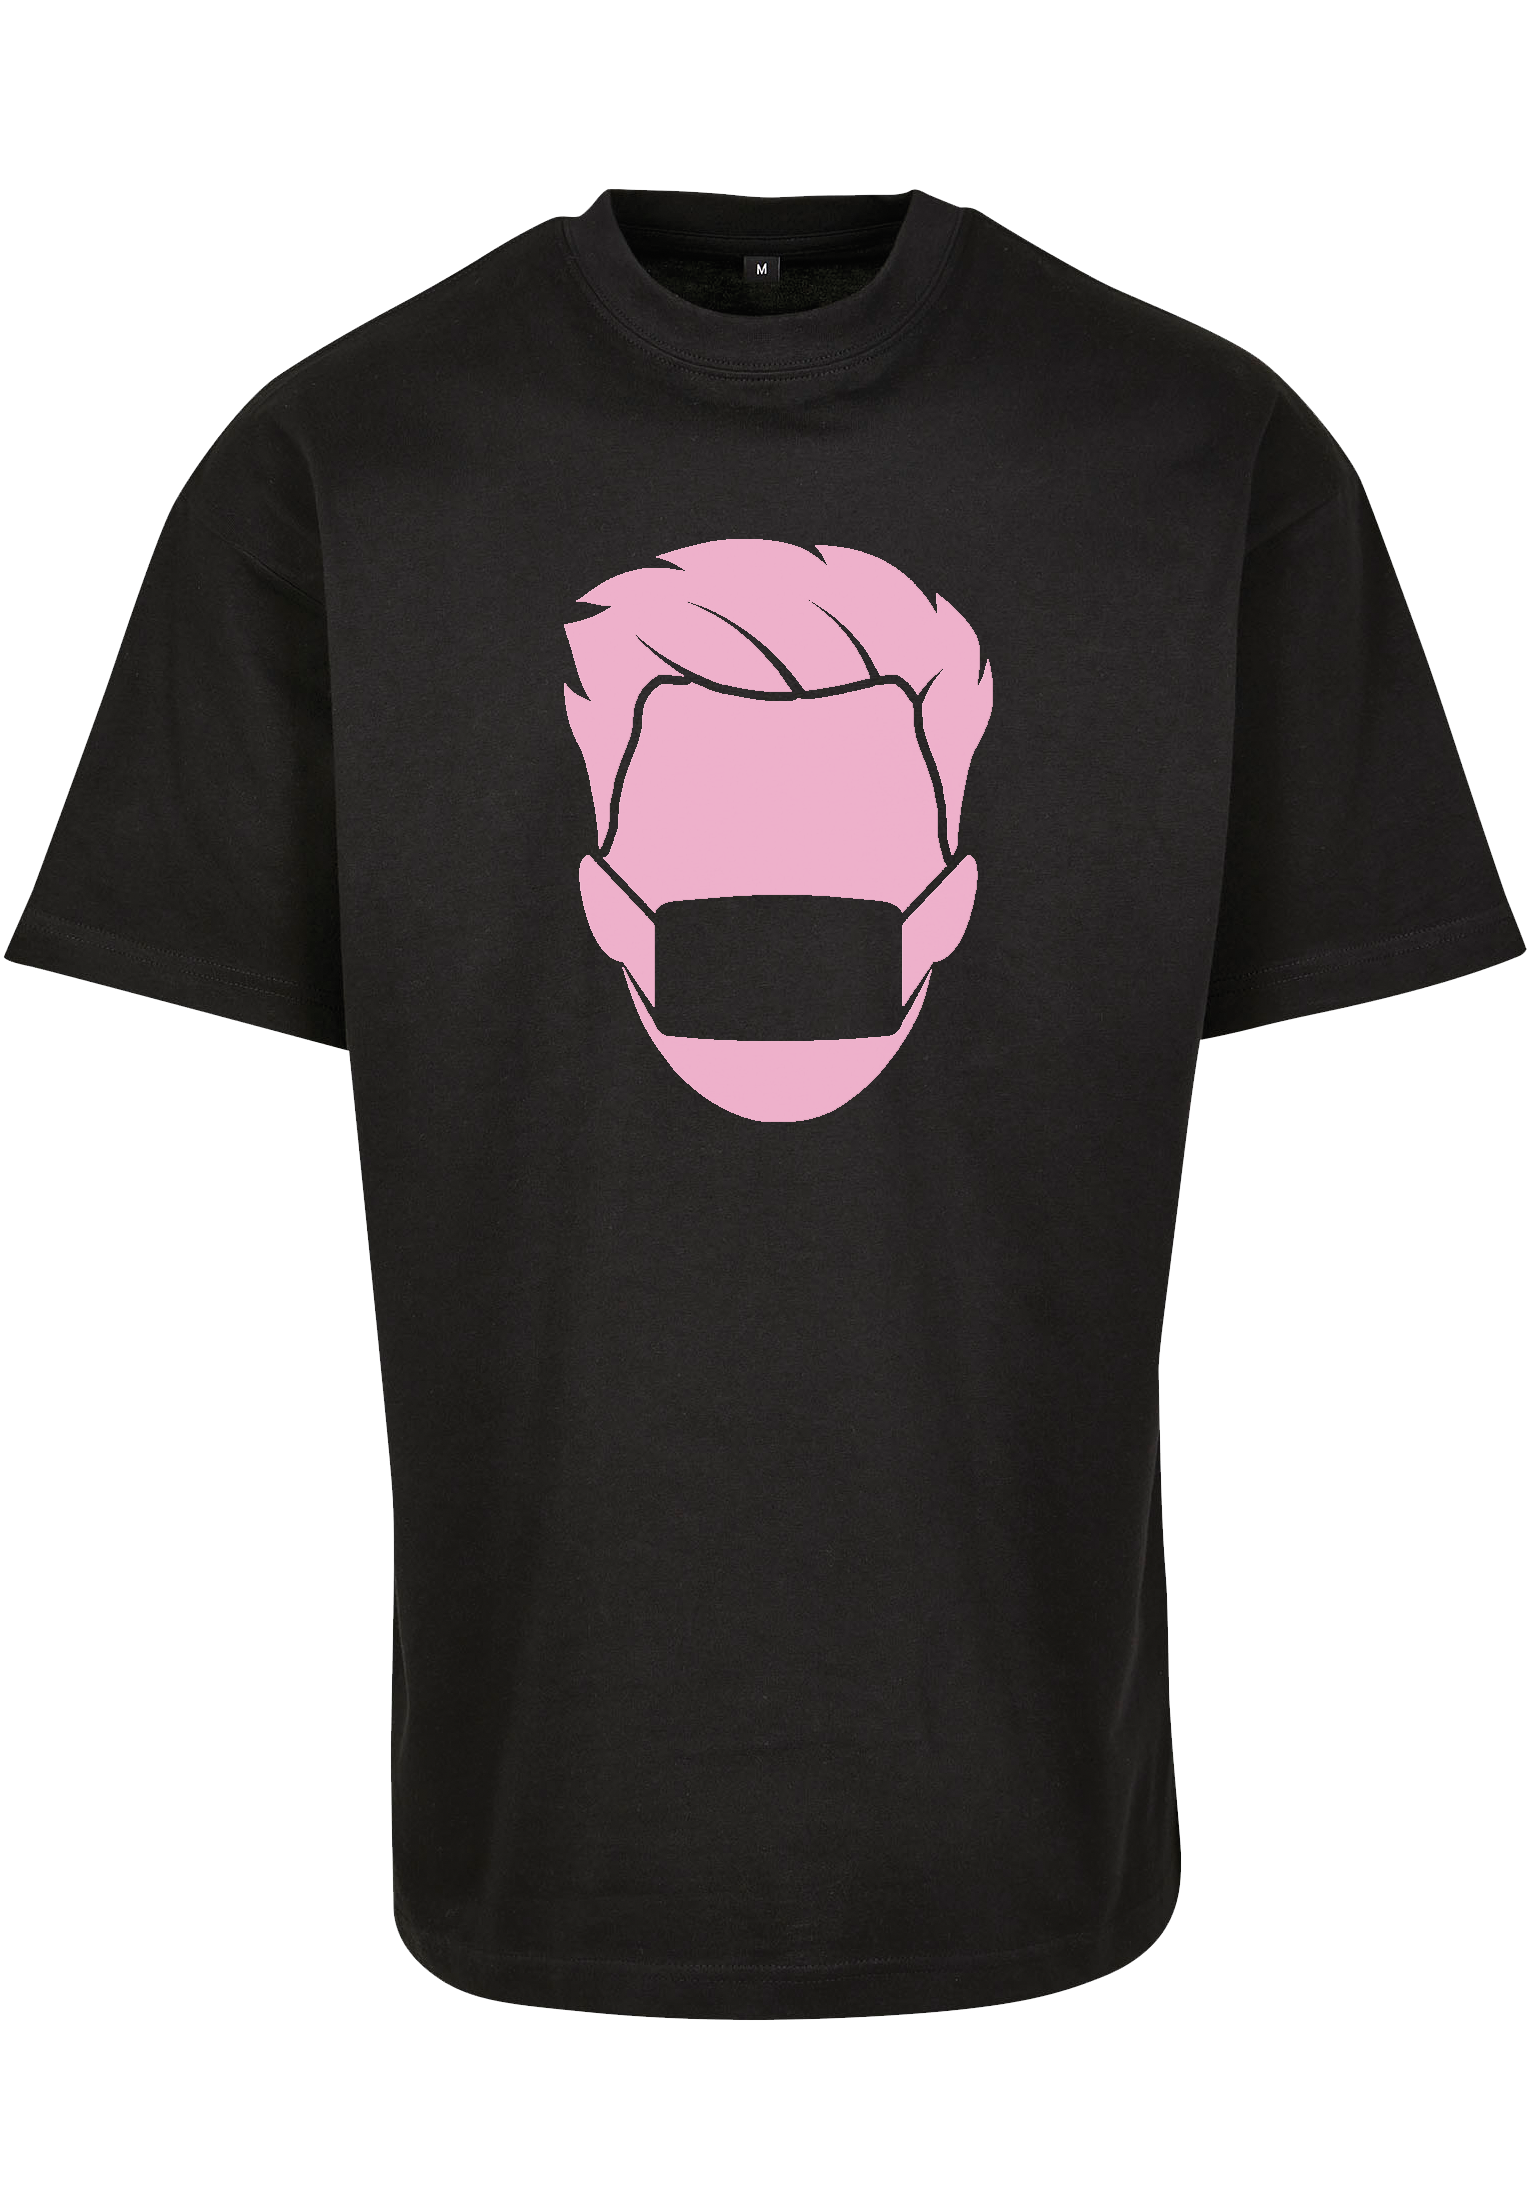 Pinkshikkey black T-Shirt